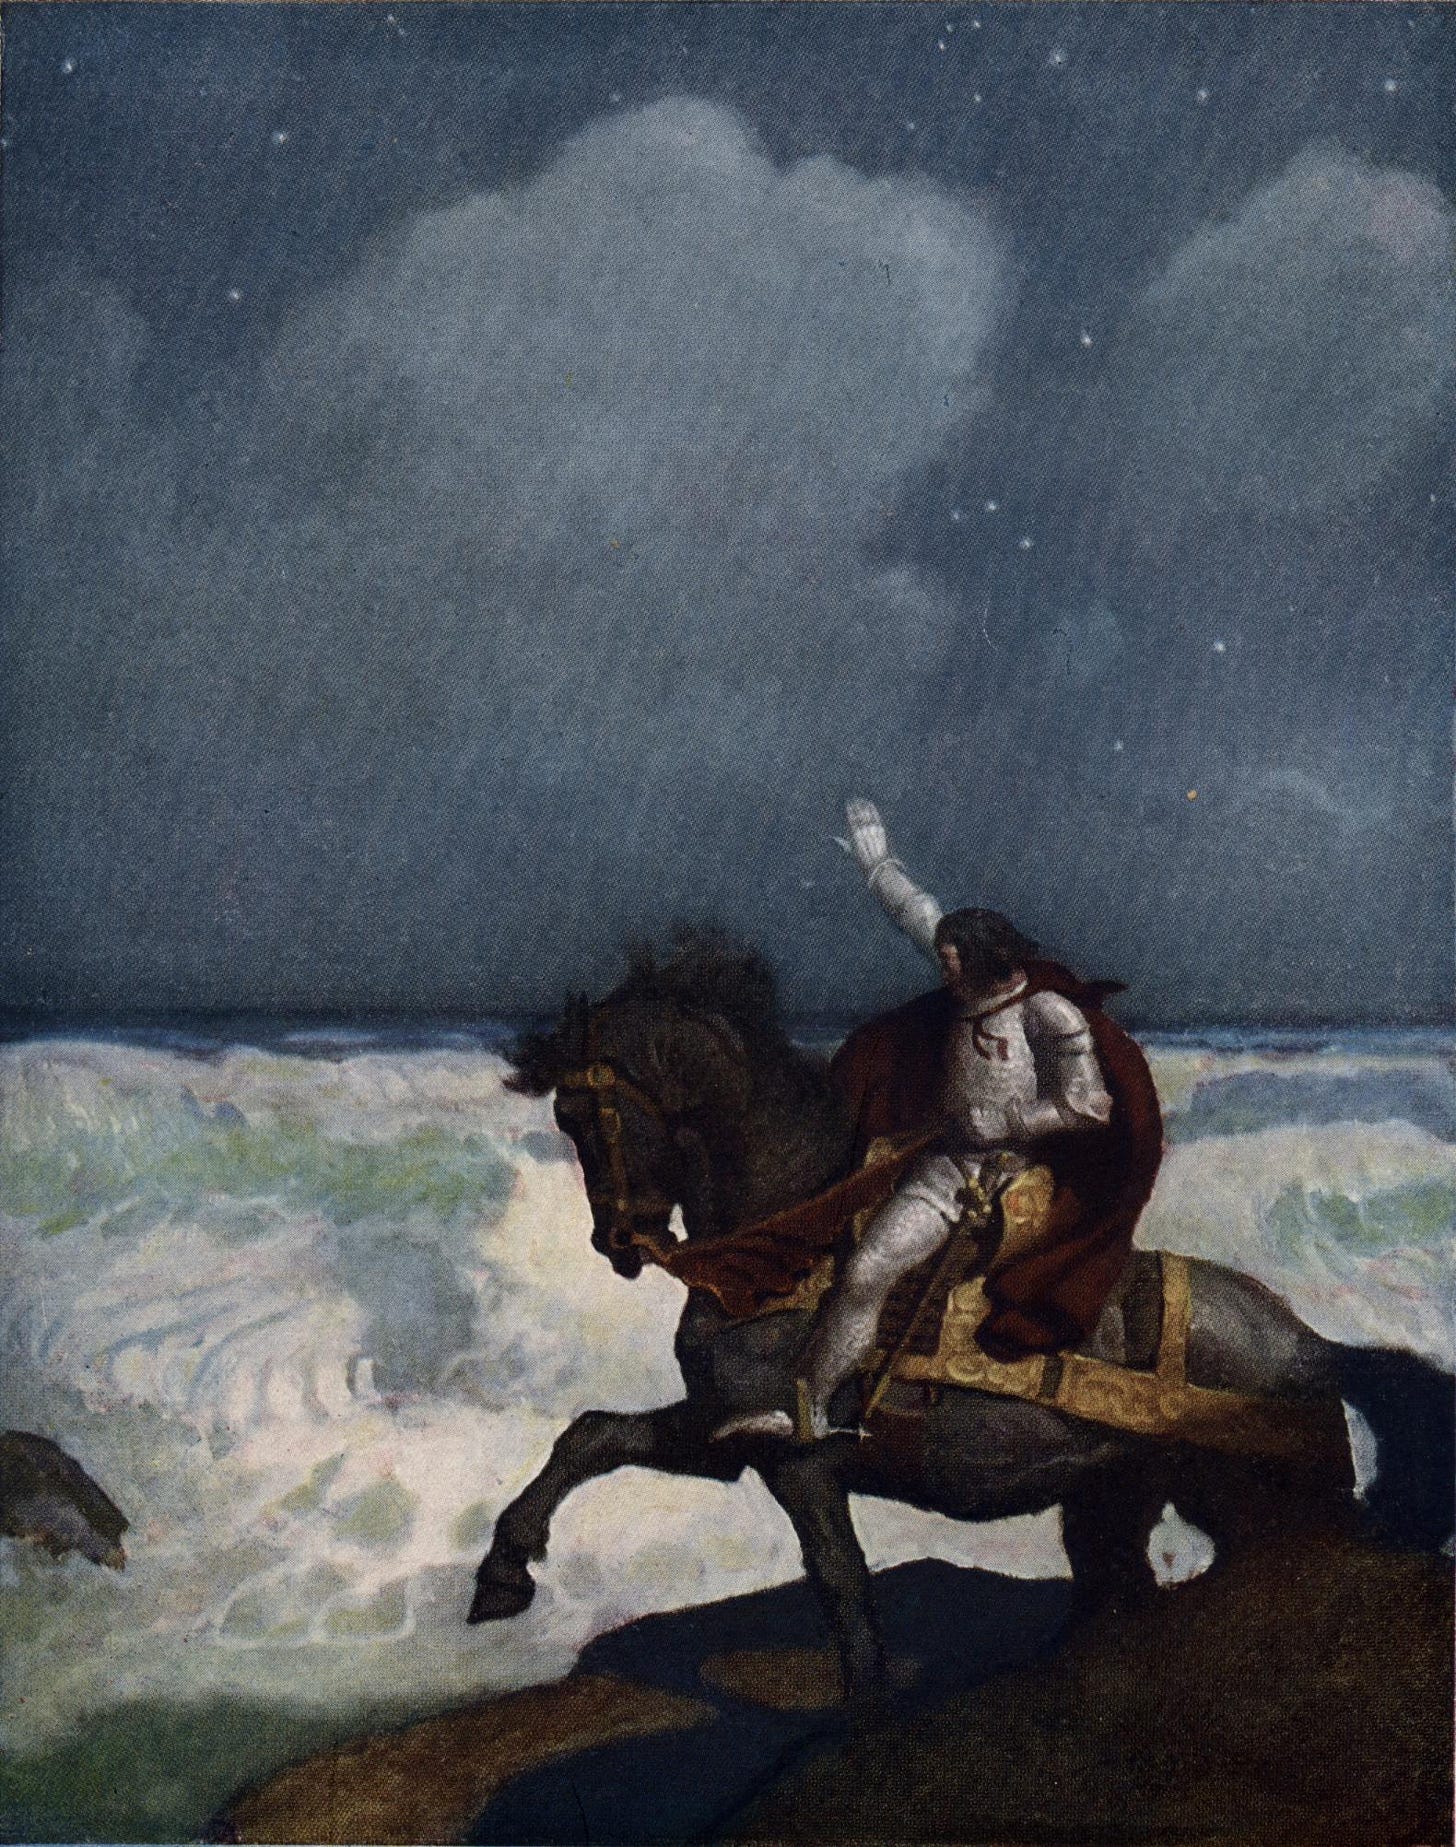 File:Boys King Arthur - N. C. Wyeth - p214.jpg - Wikimedia Commons